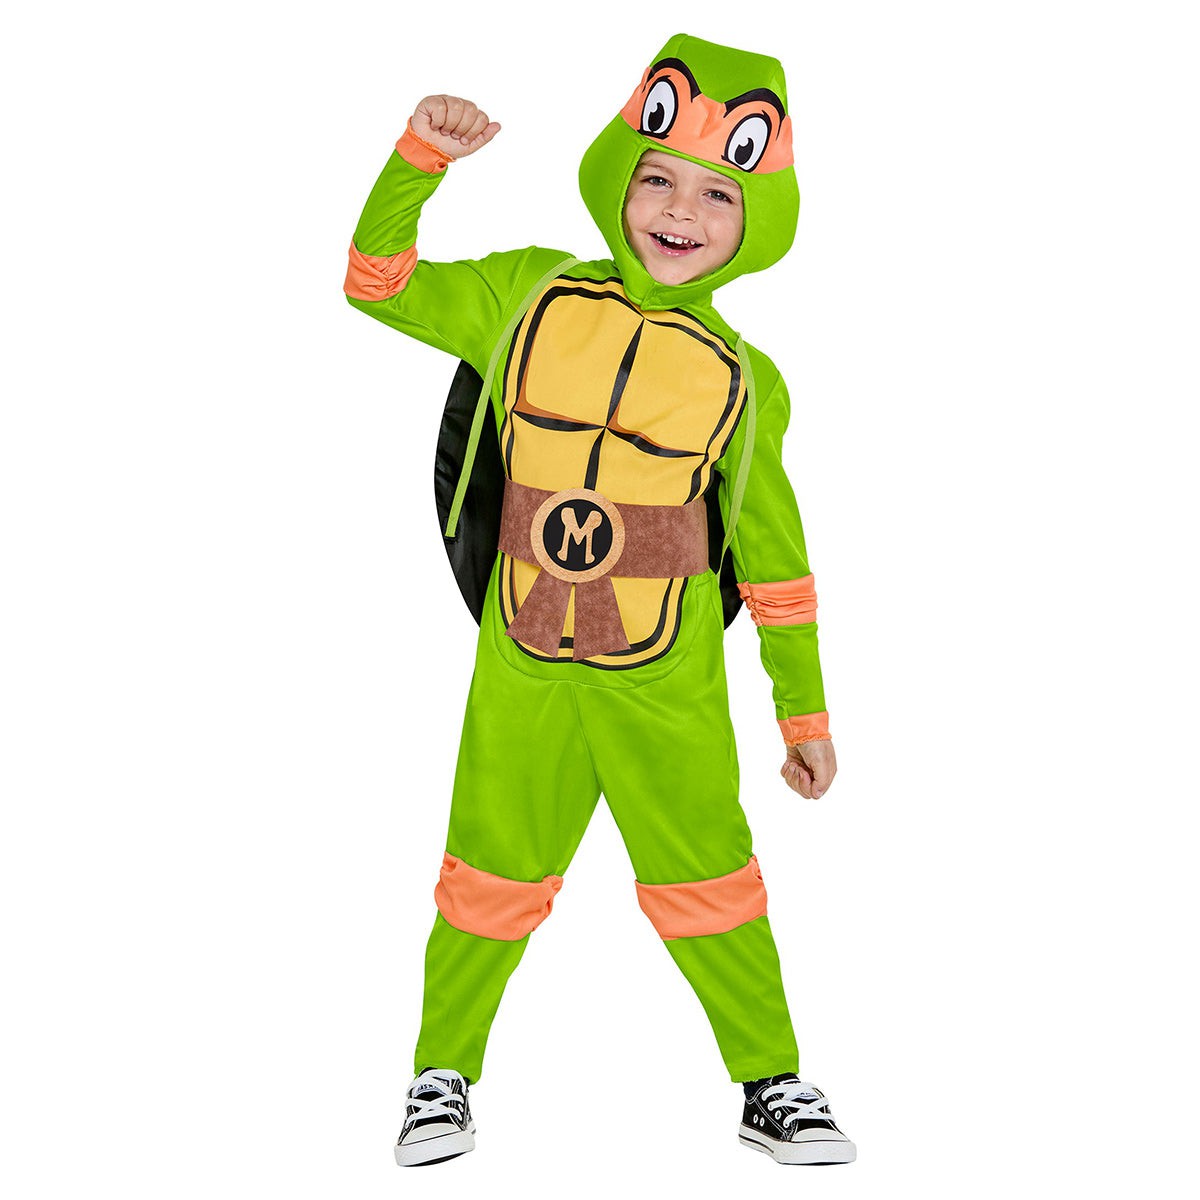 IN SPIRIT DESIGNS Costumes Ninja Turtles Michelangelo Costume for Toddlers